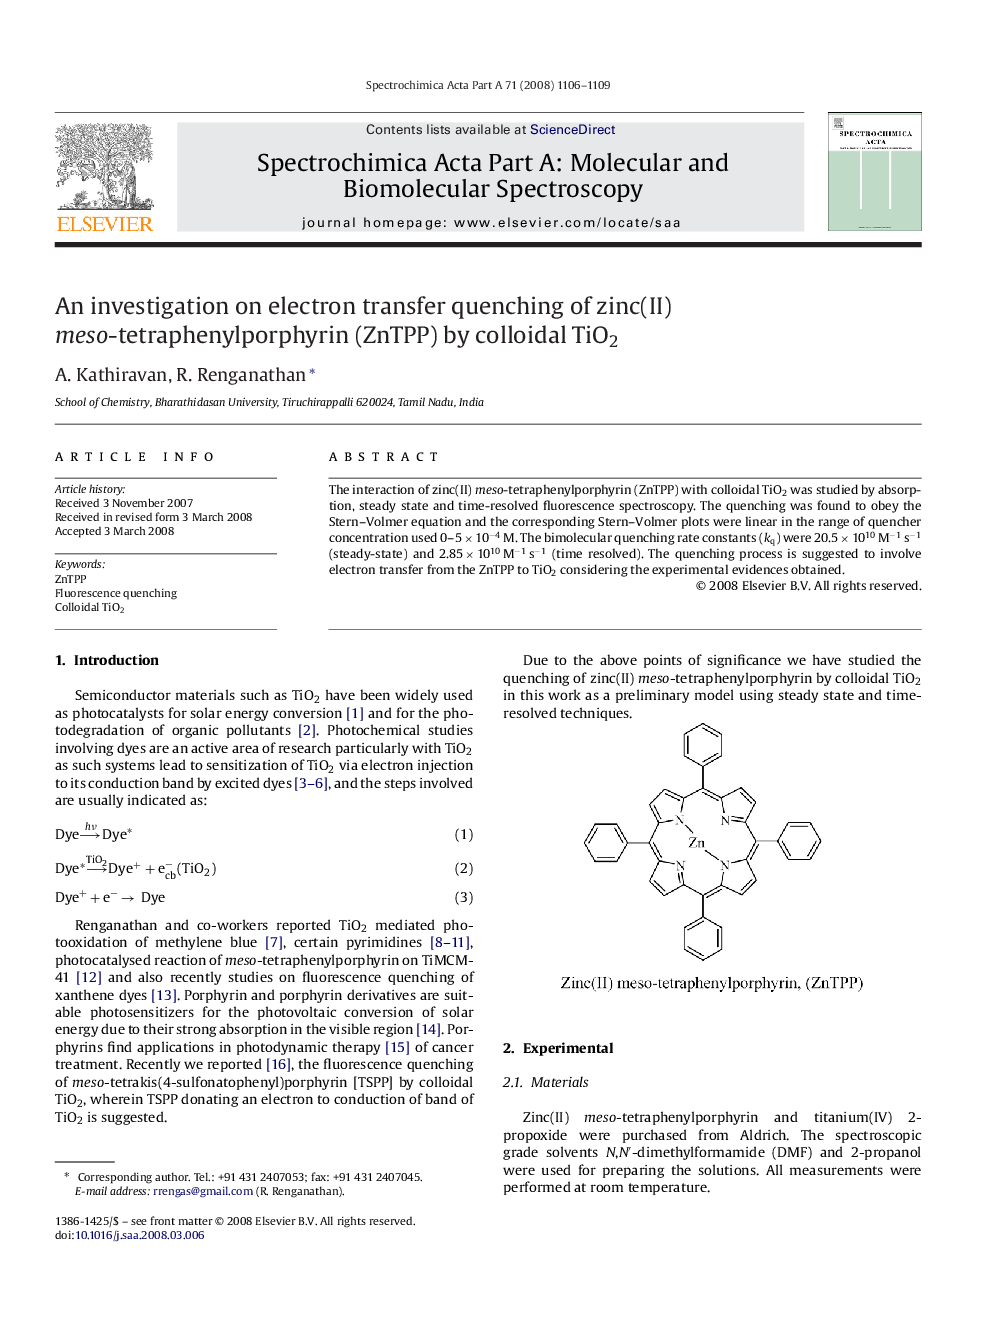 An investigation on electron transfer quenching of zinc(II) meso-tetraphenylporphyrin (ZnTPP) by colloidal TiO2